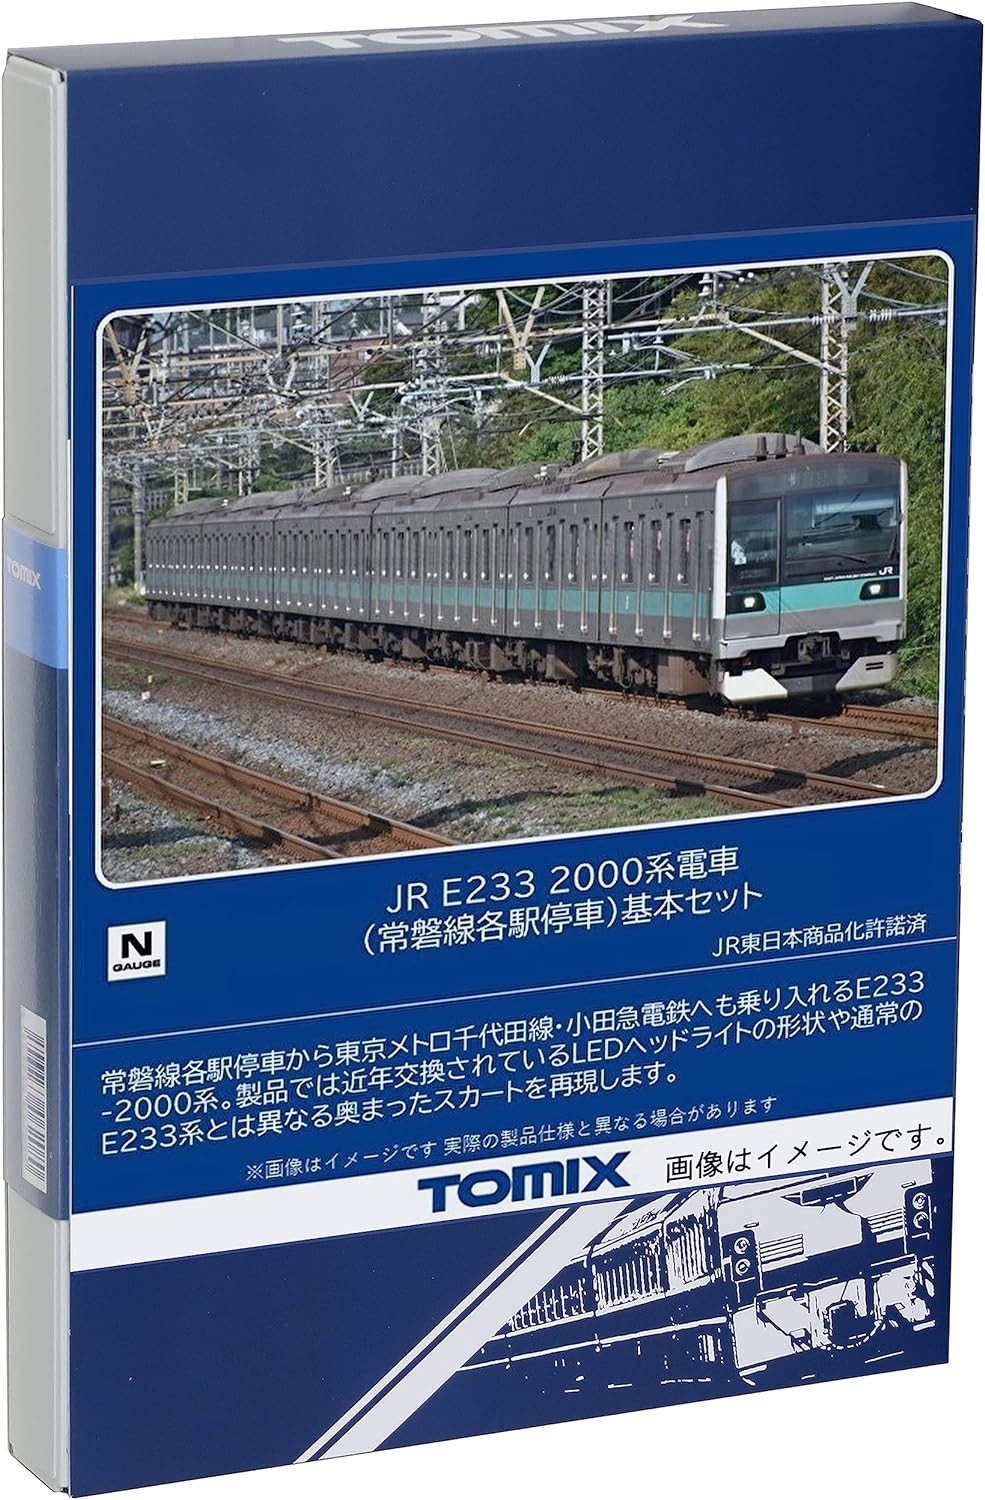 TOMIX 98841 N Gauge JR E233 2000 Series Joban Line Train Station Basic Set - BanzaiHobby